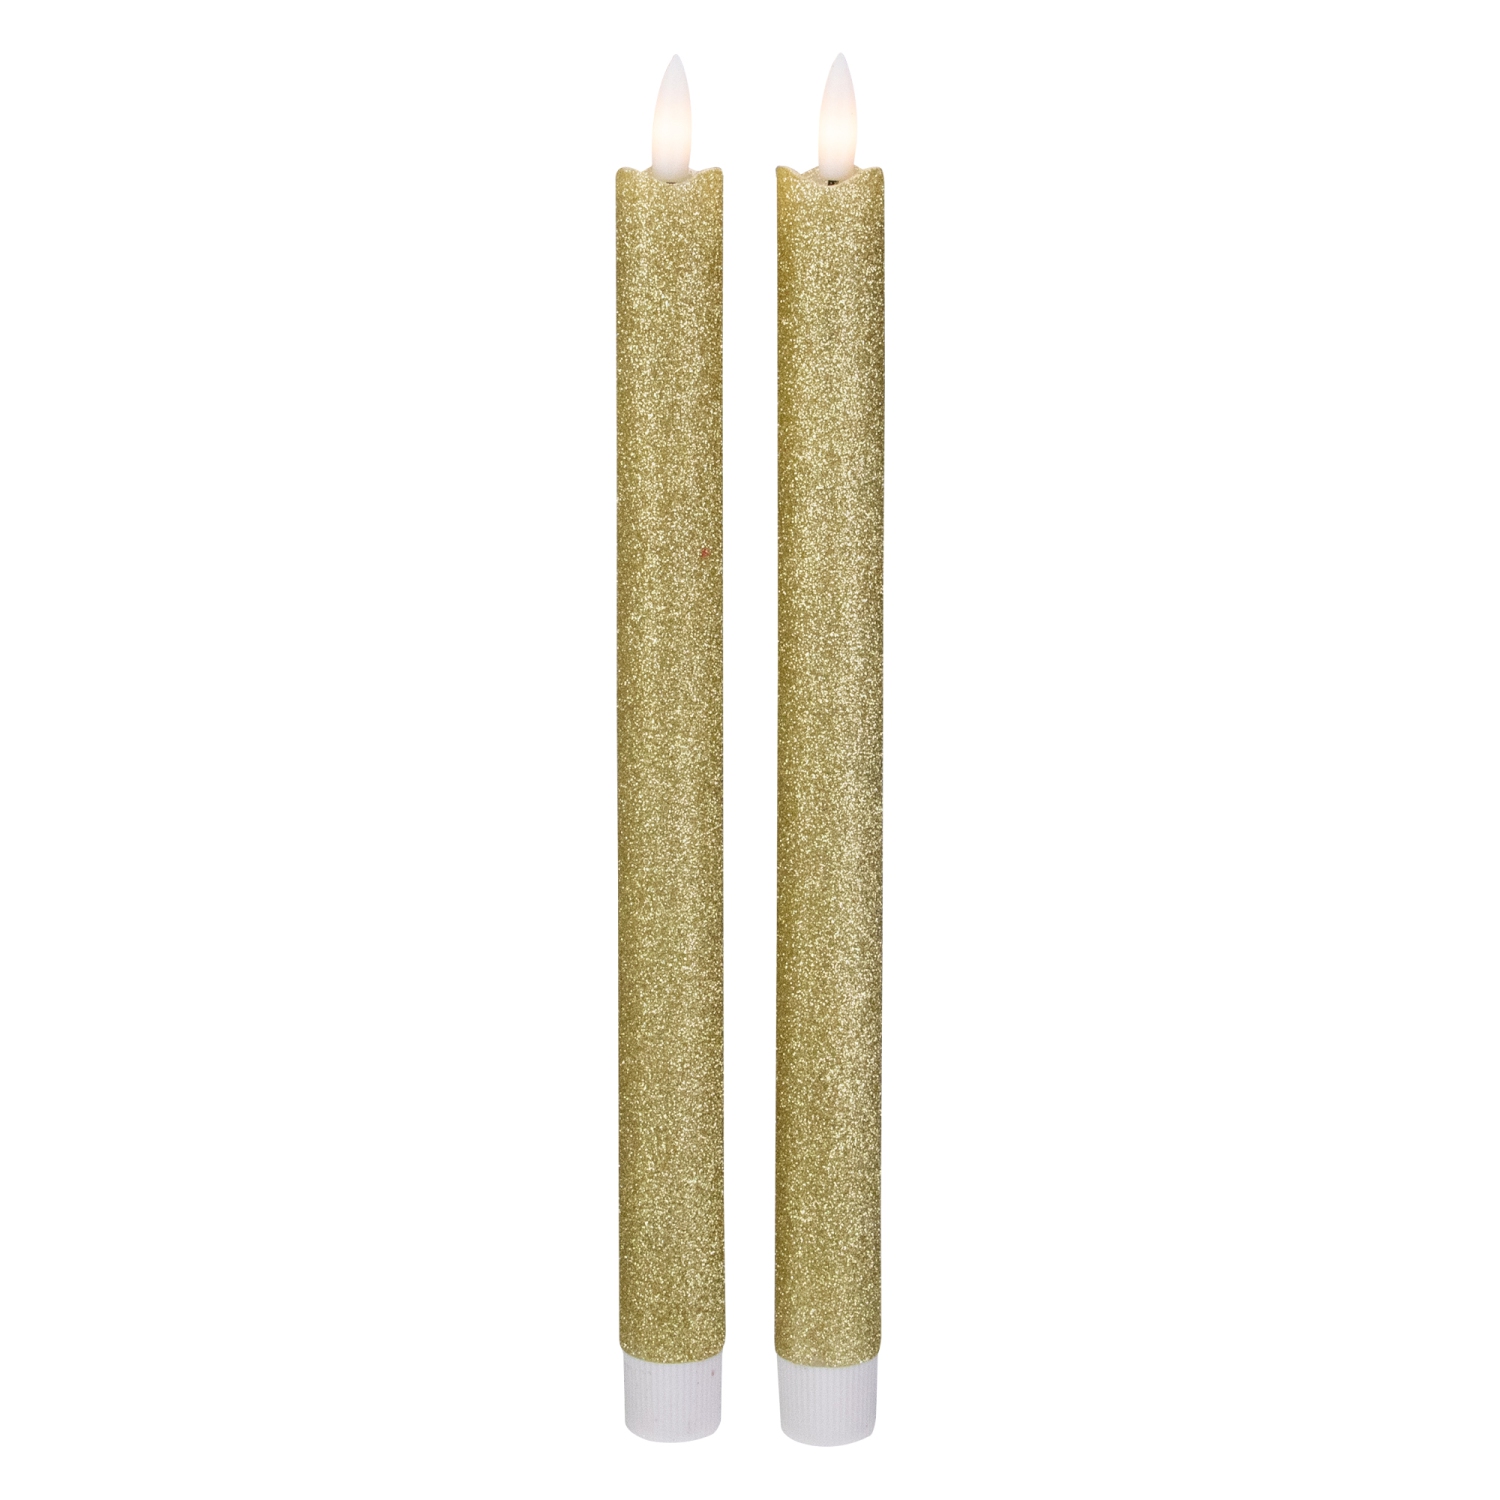 Set 2 Gold Glittered Flameless LED Taper Christmas Candles 11"